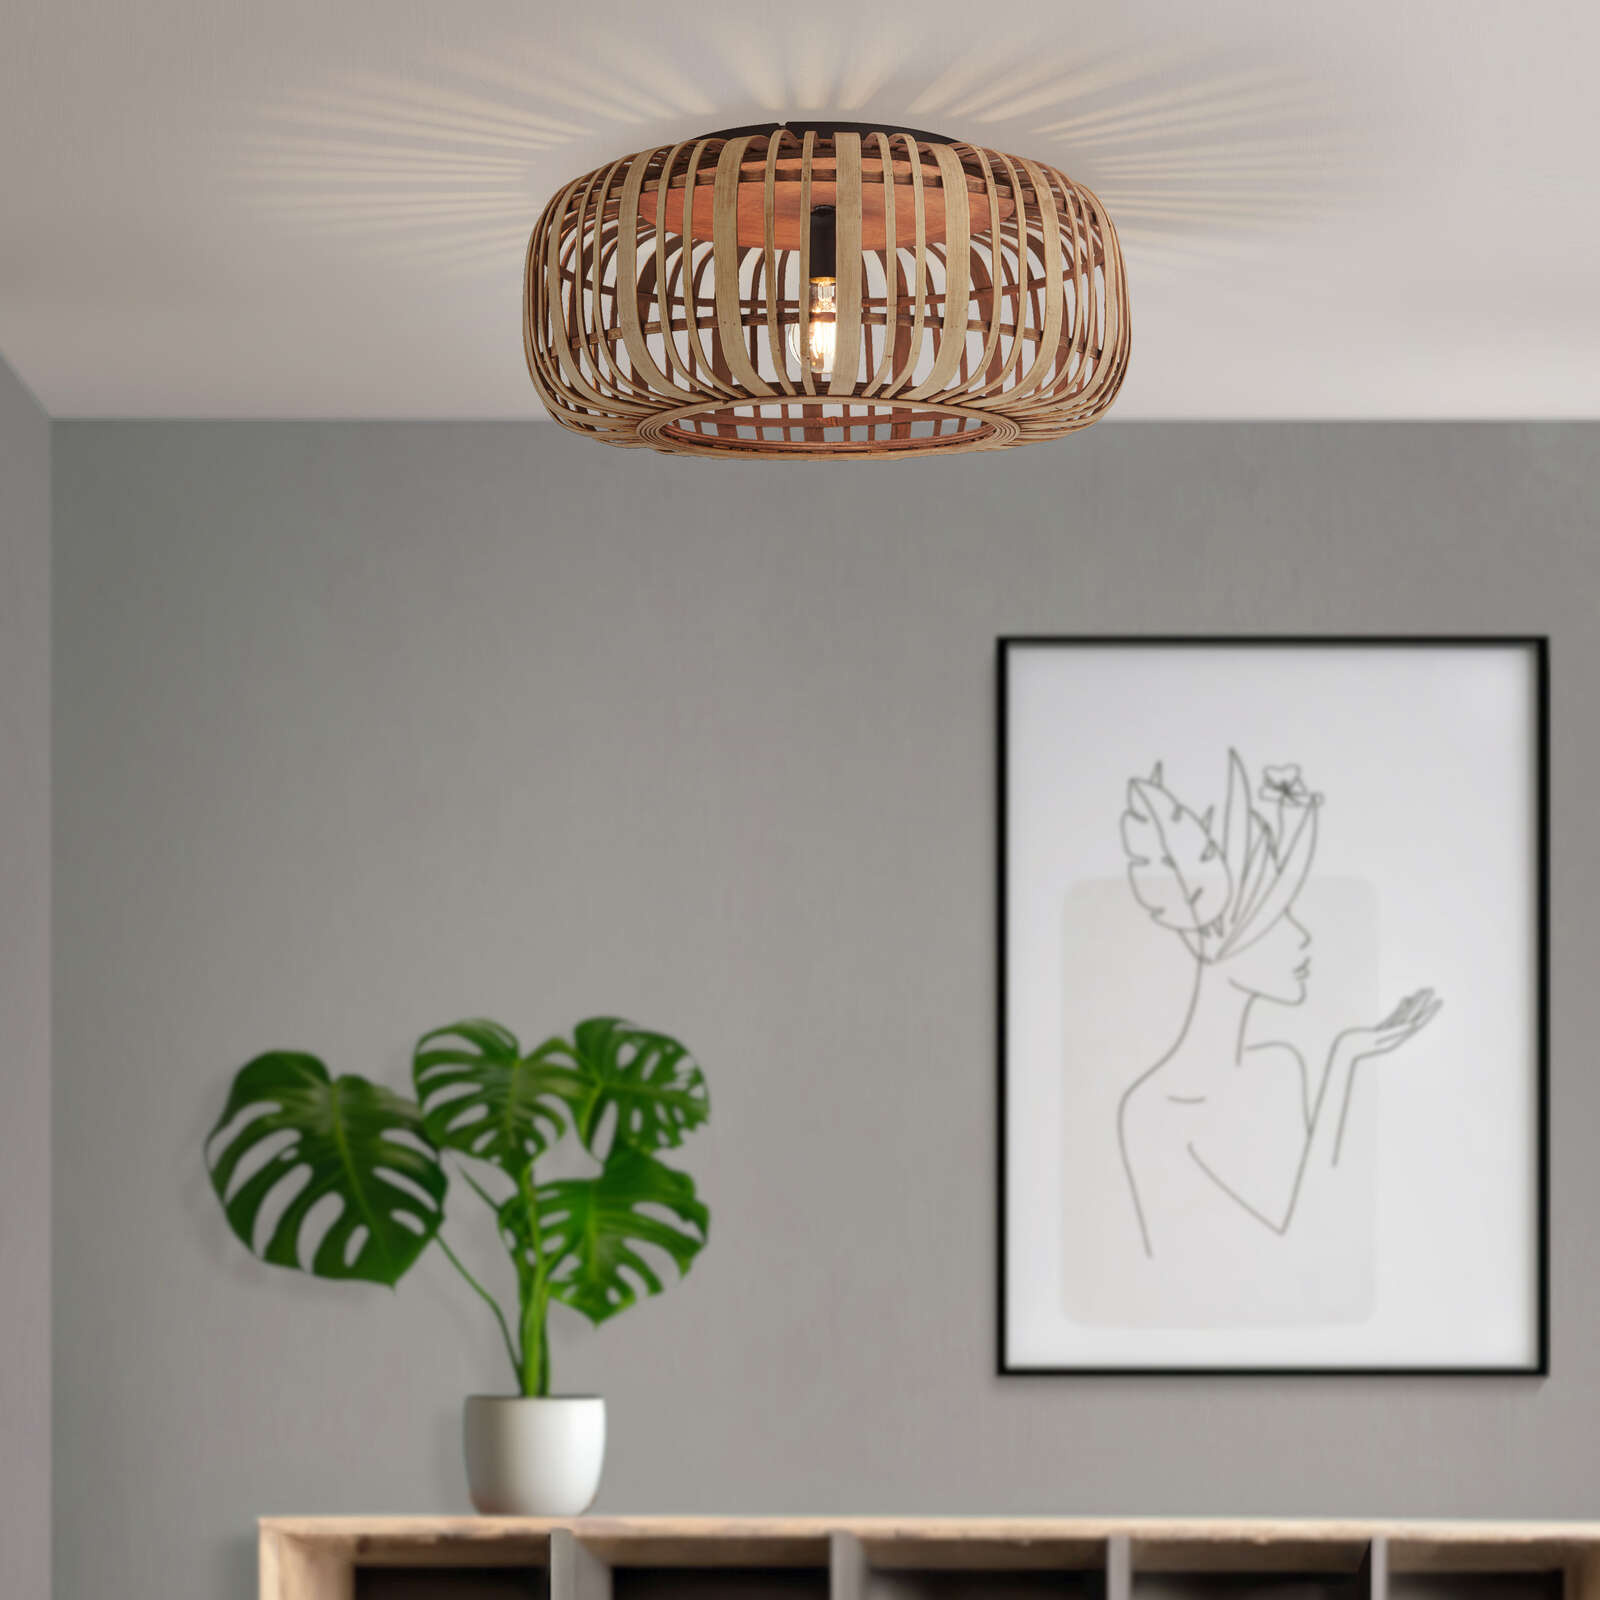             Bamboe plafondlamp - Willi 10 - Bruin
        